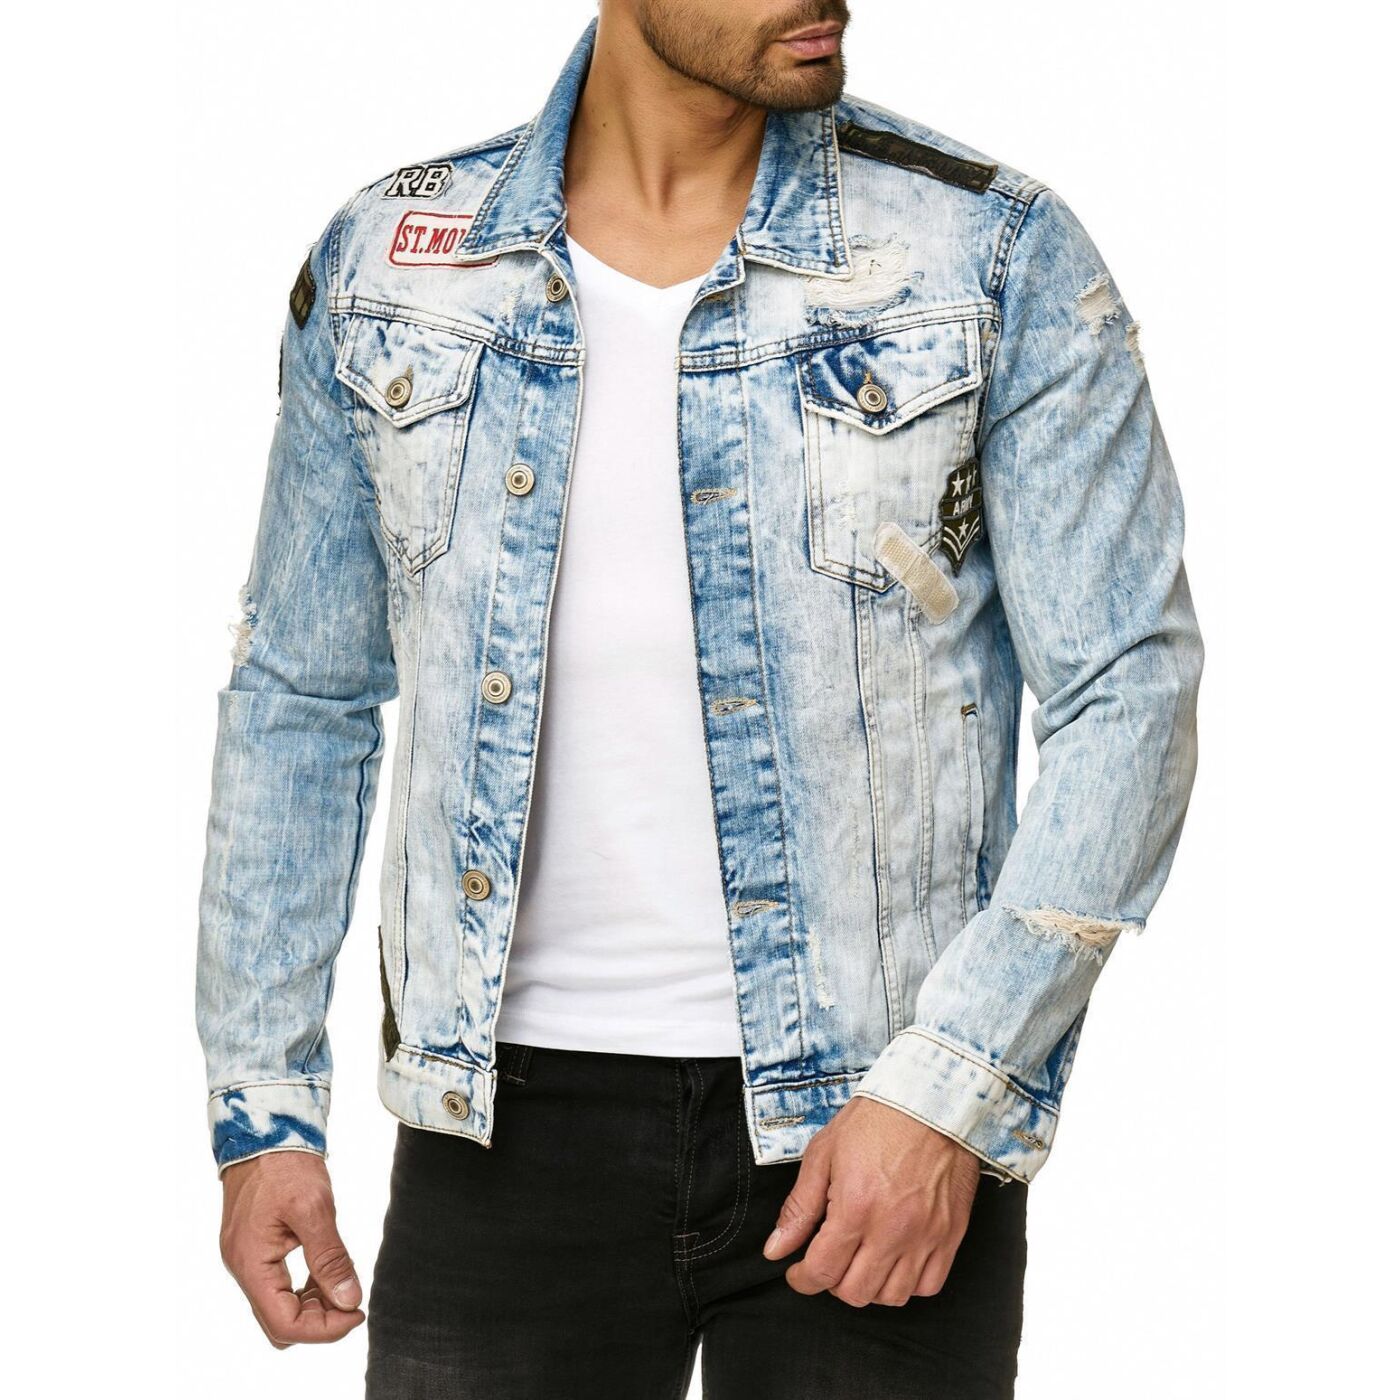 mr price jacket jeans